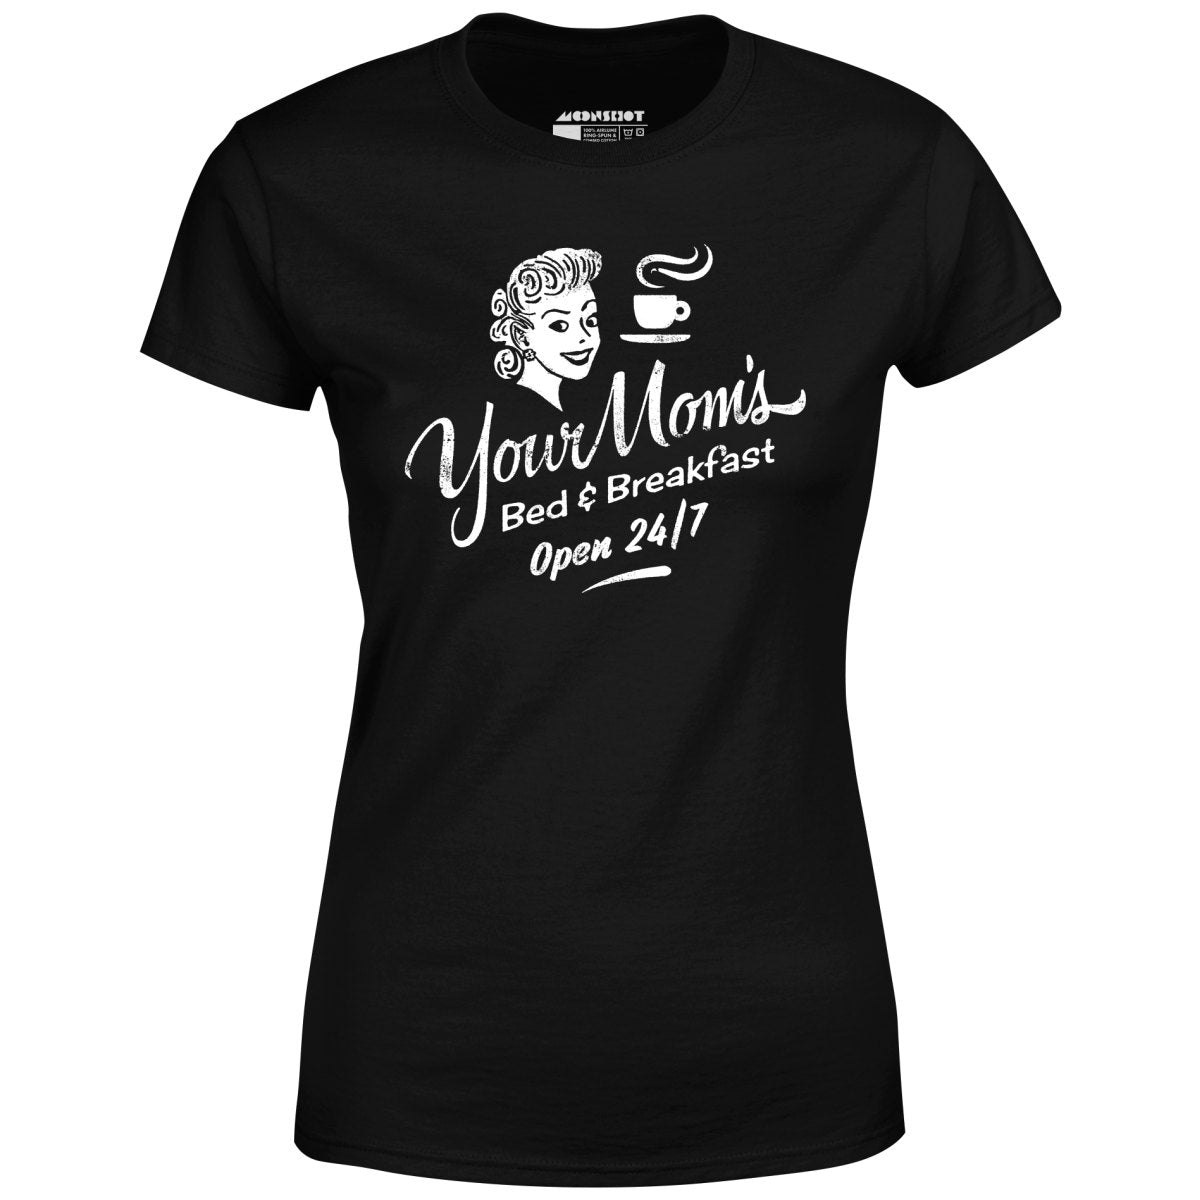 Your Mom's Bed & Breakfast - Women's T-Shirt